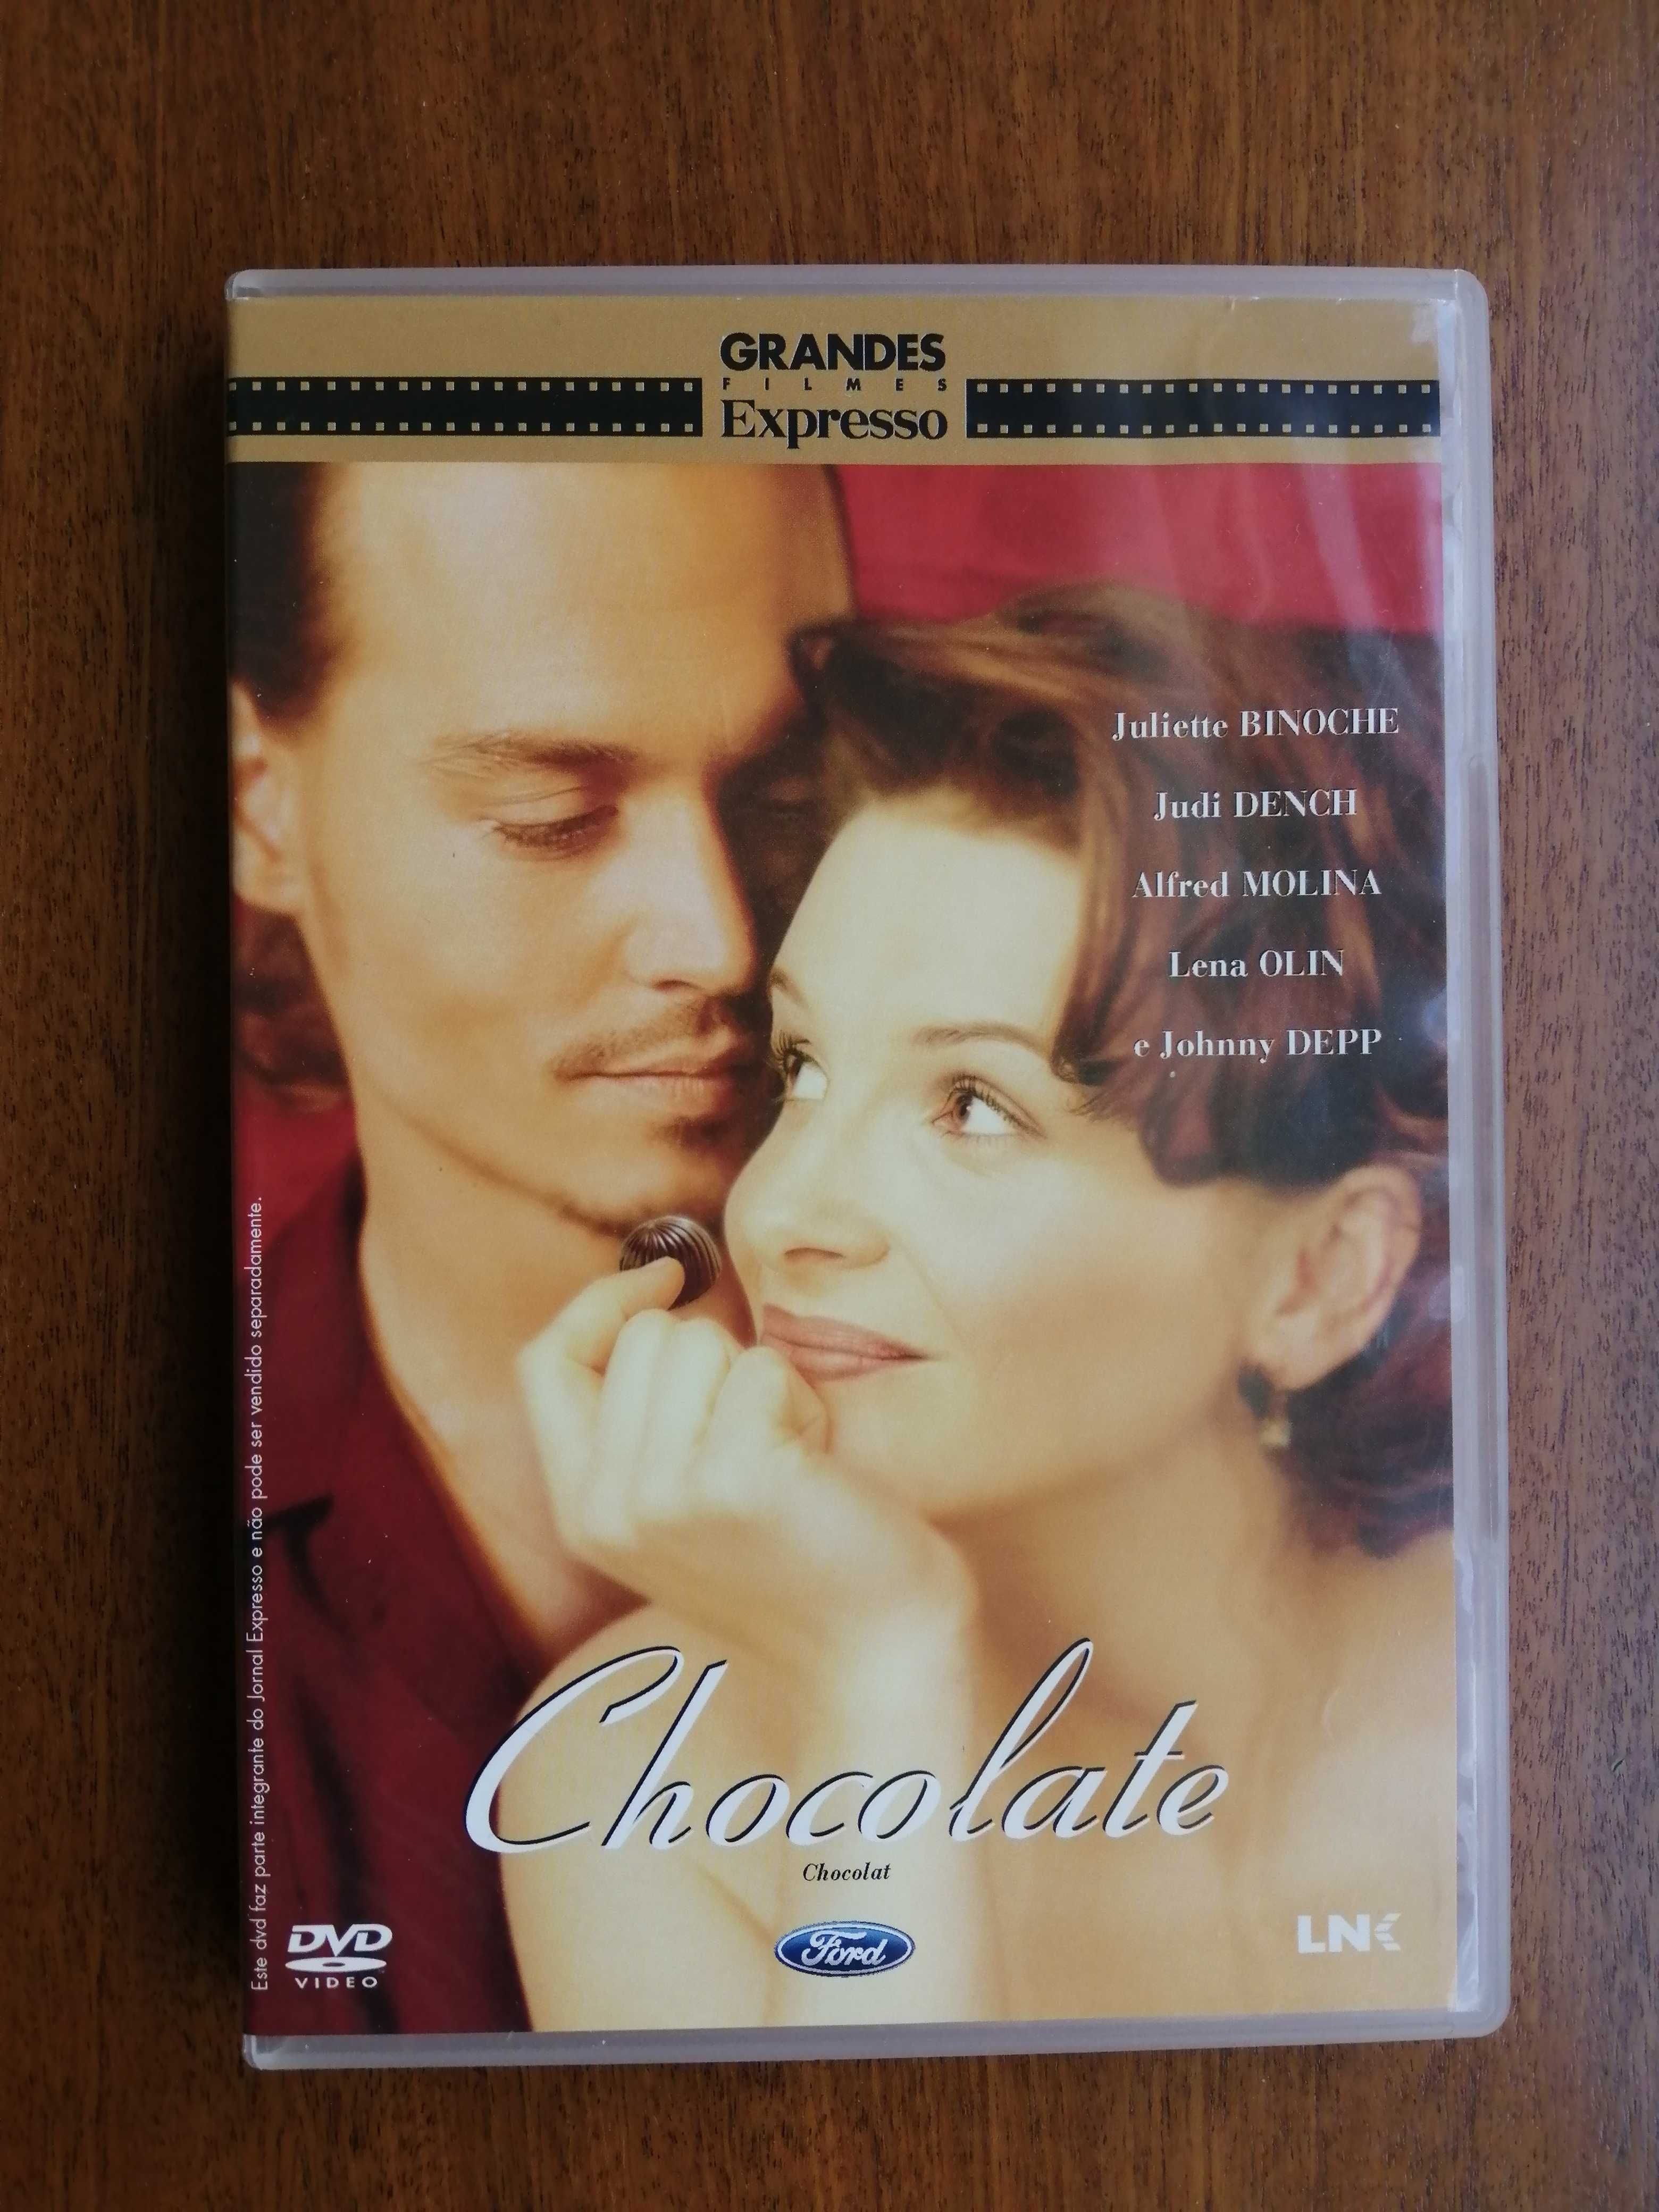 Chocolate - Chocolat DVD